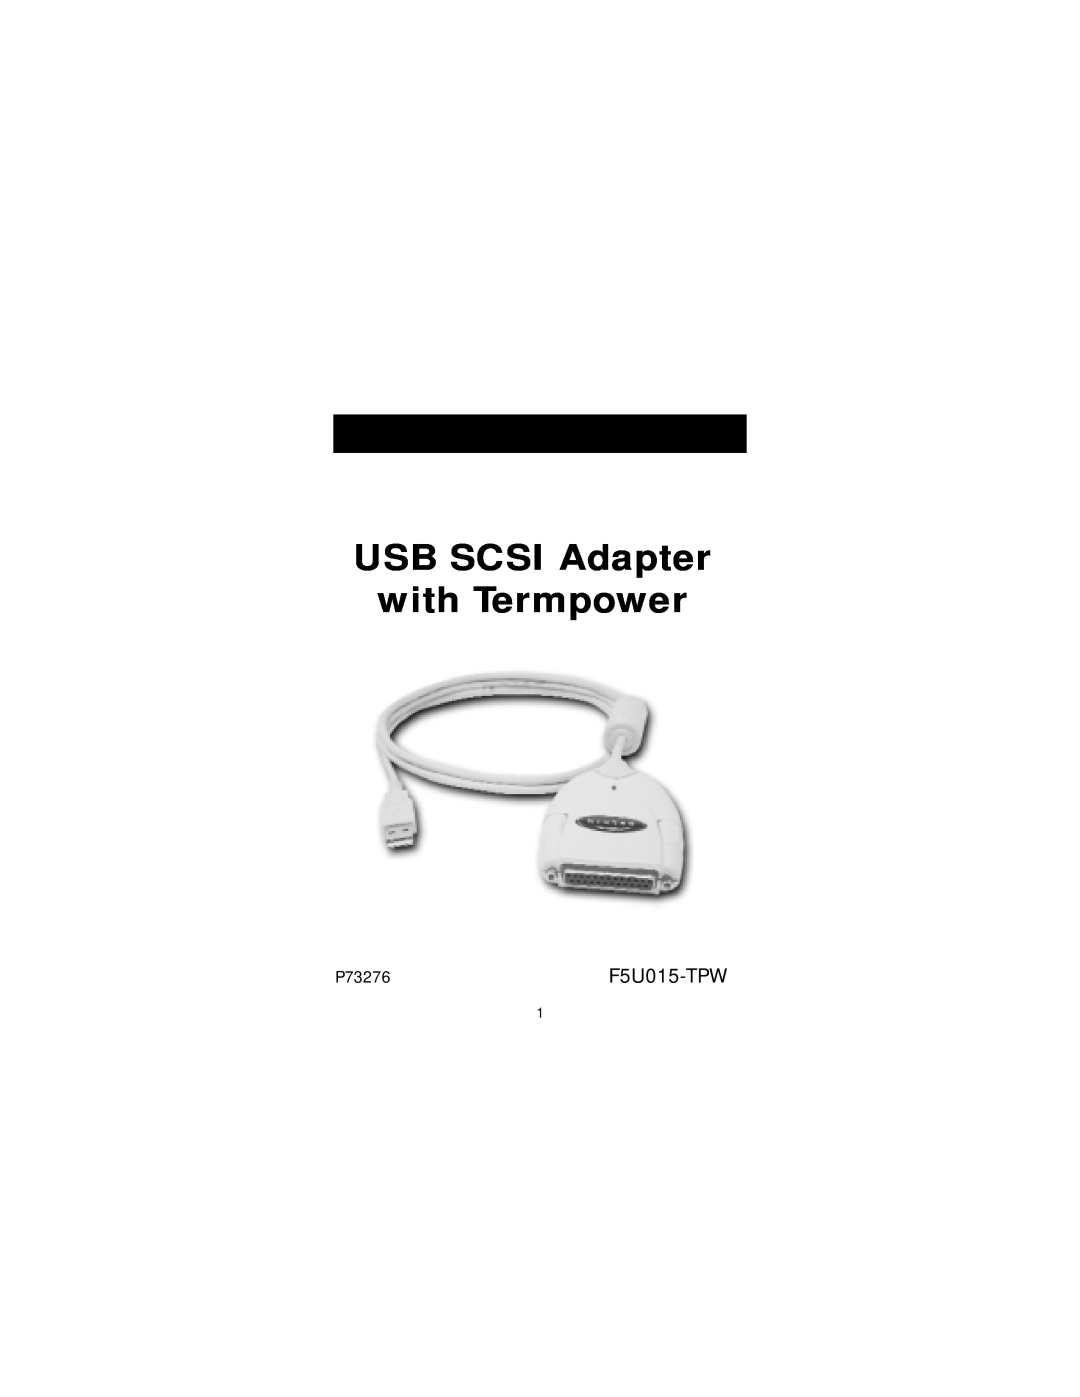 Belkin manual USB SCSI Adapter with Termpower, P73276F5U015-TPW 